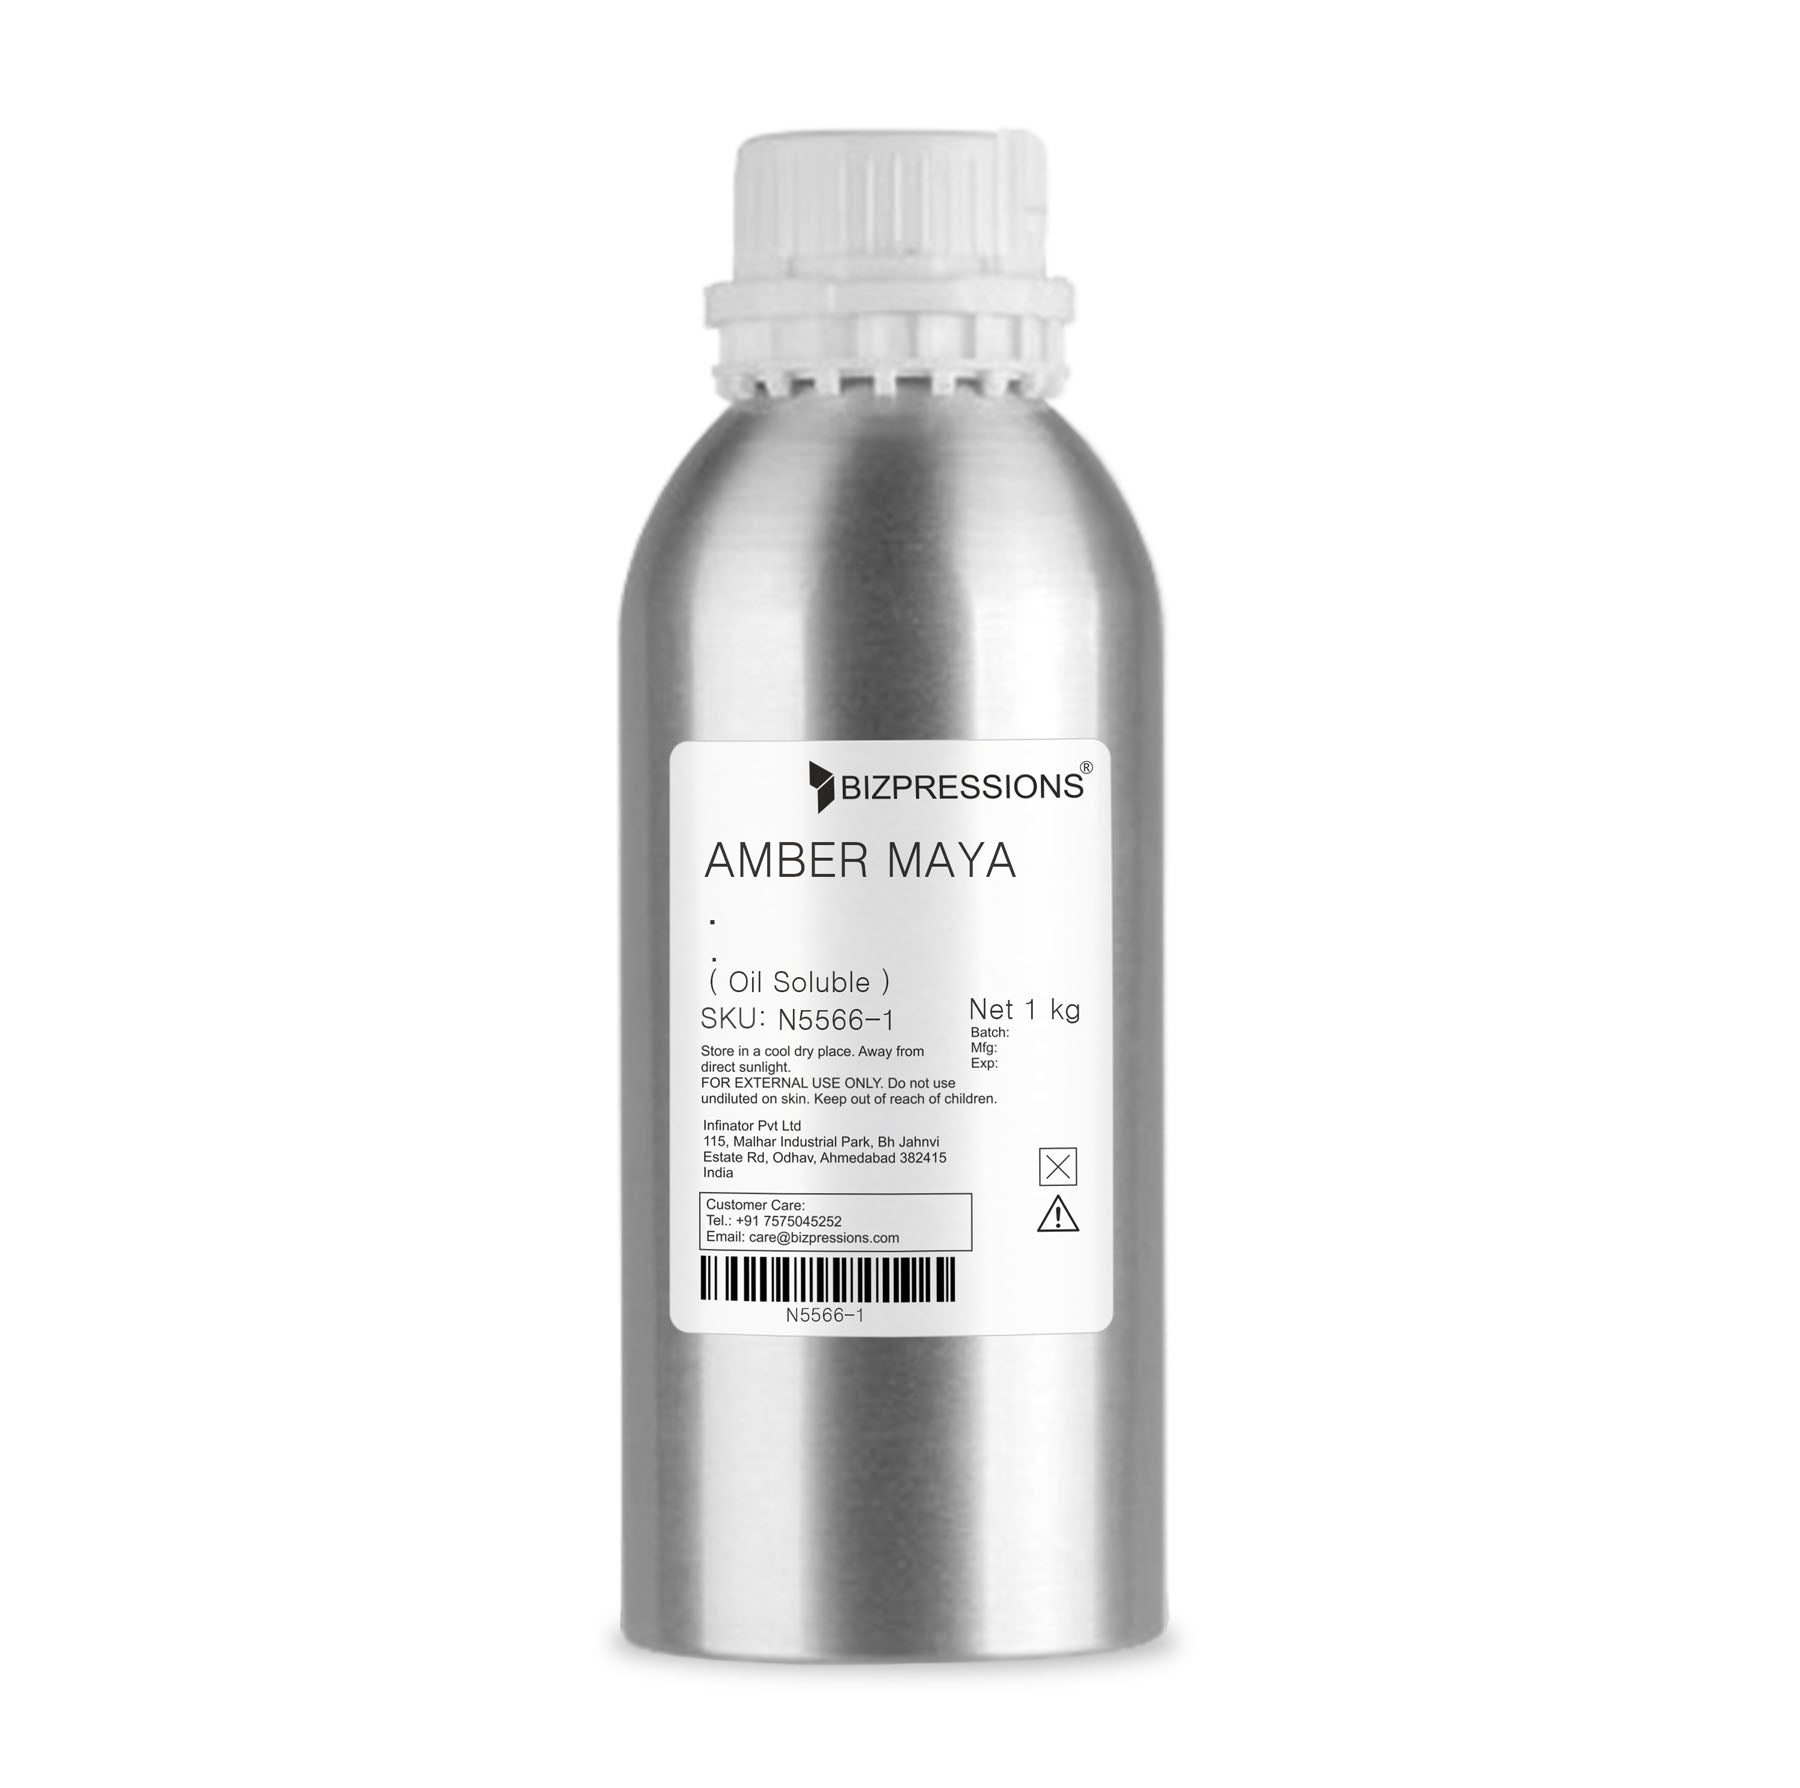 AMBER MAYA - Fragrance ( Oil Soluble ) - 1 kg